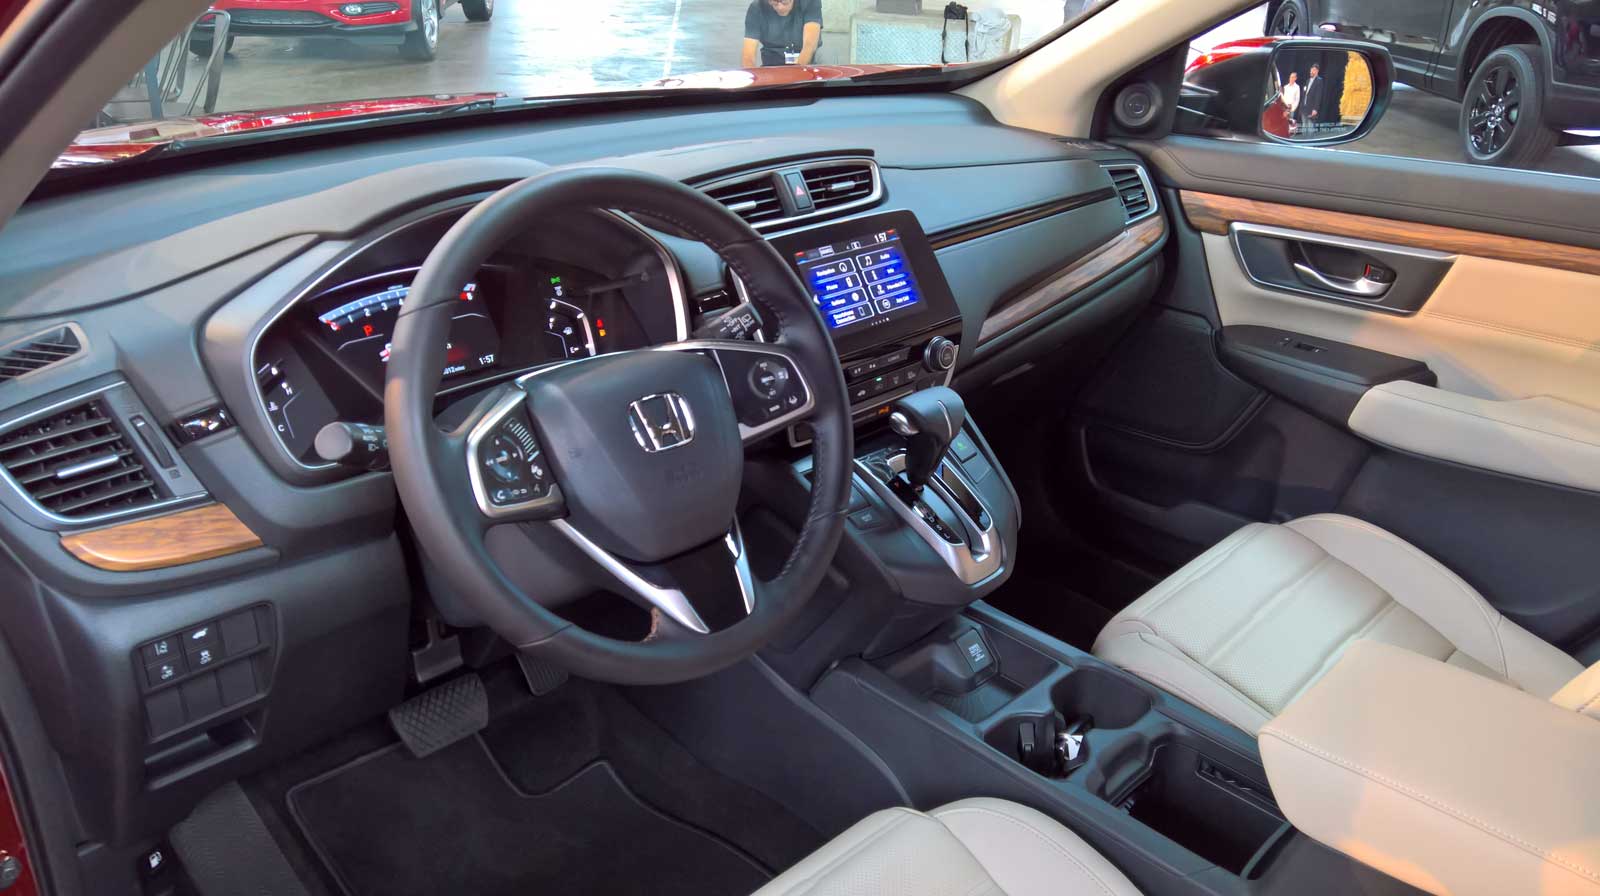 2017 Honda CRV Touring Test Drive Review  AutoTraderca